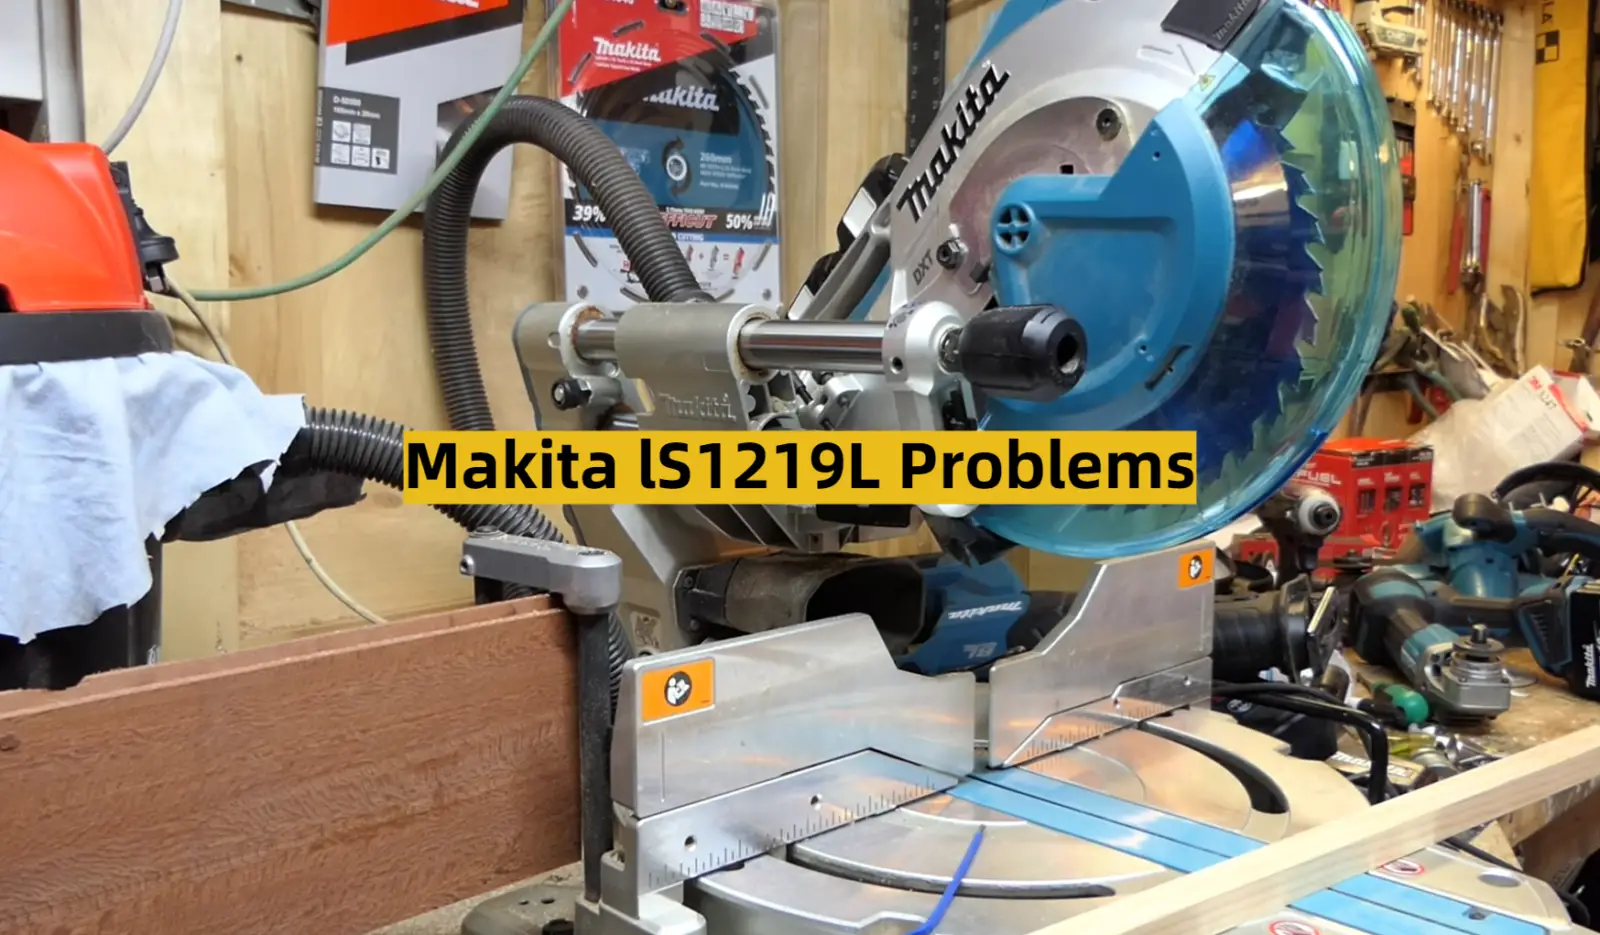 Makita lS1219L Problems